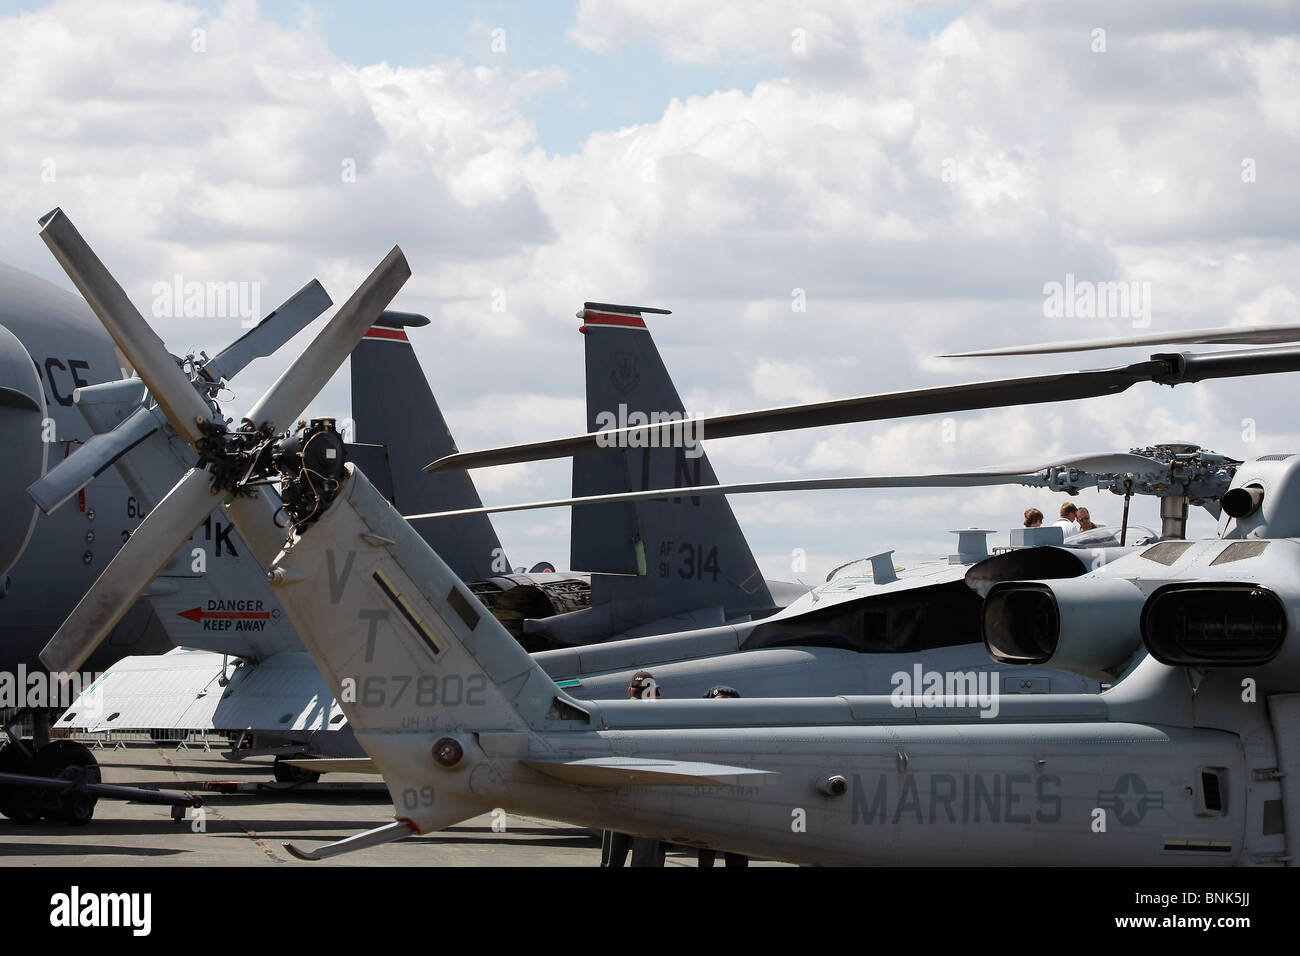 US Airforce display   at Farnborough Airshow 2010 Stock Photo